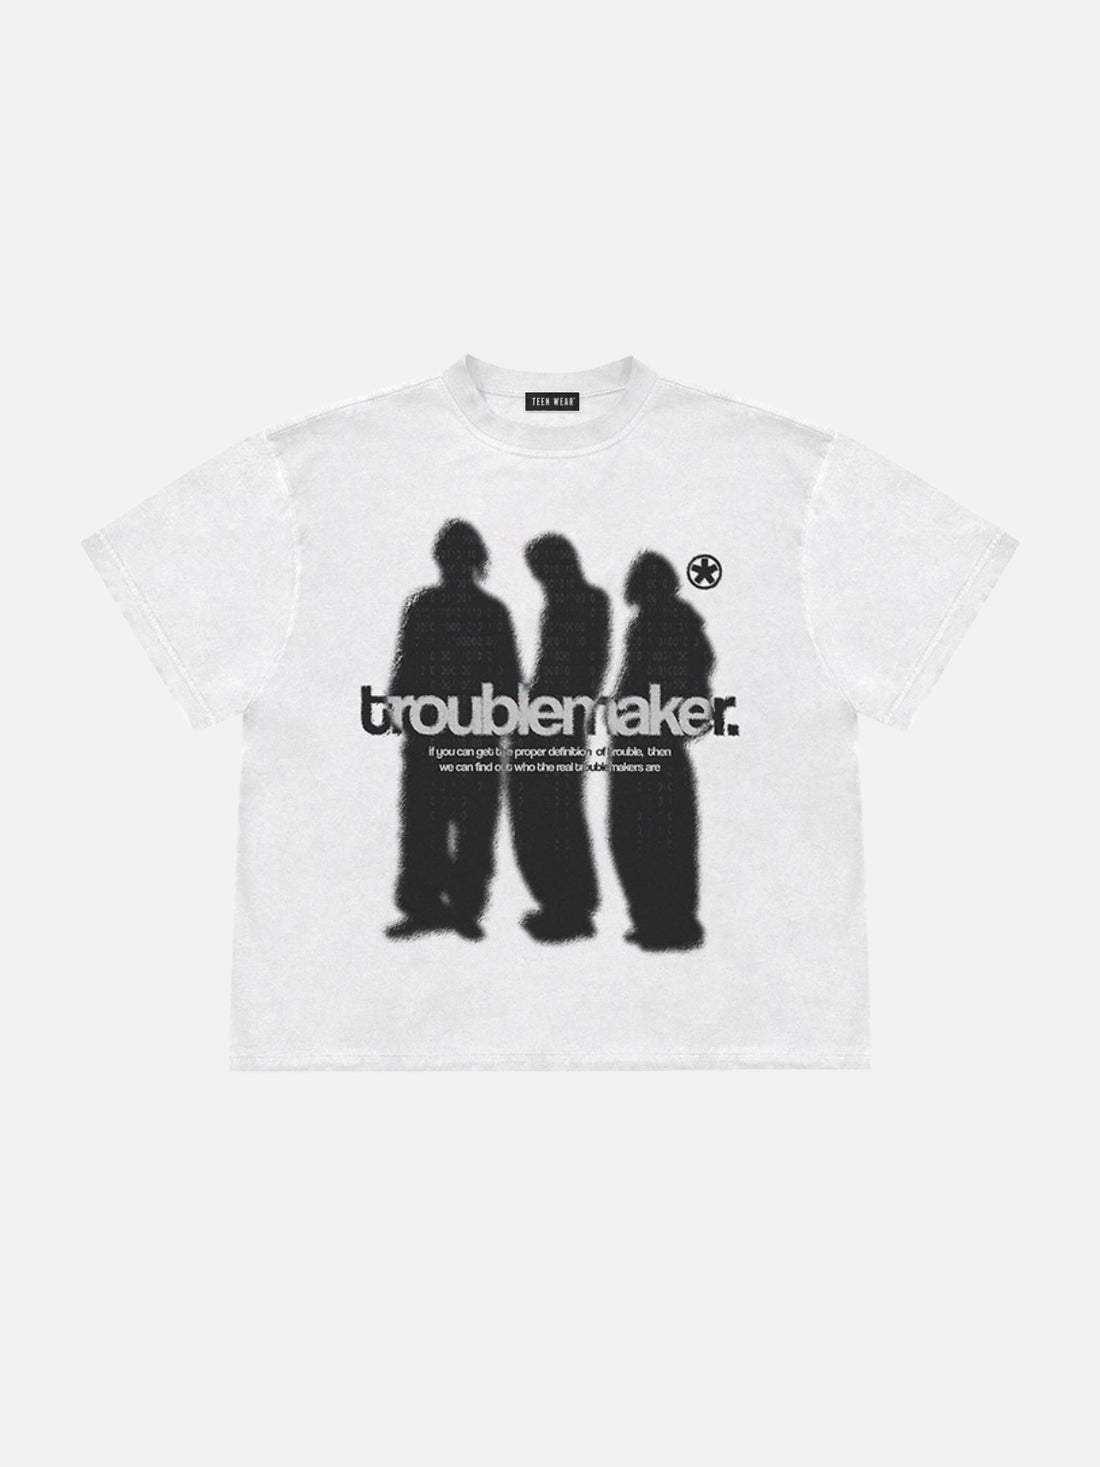 TROUBLEMAKER - Oversized Print T-Shirt White | Teenwear.eu